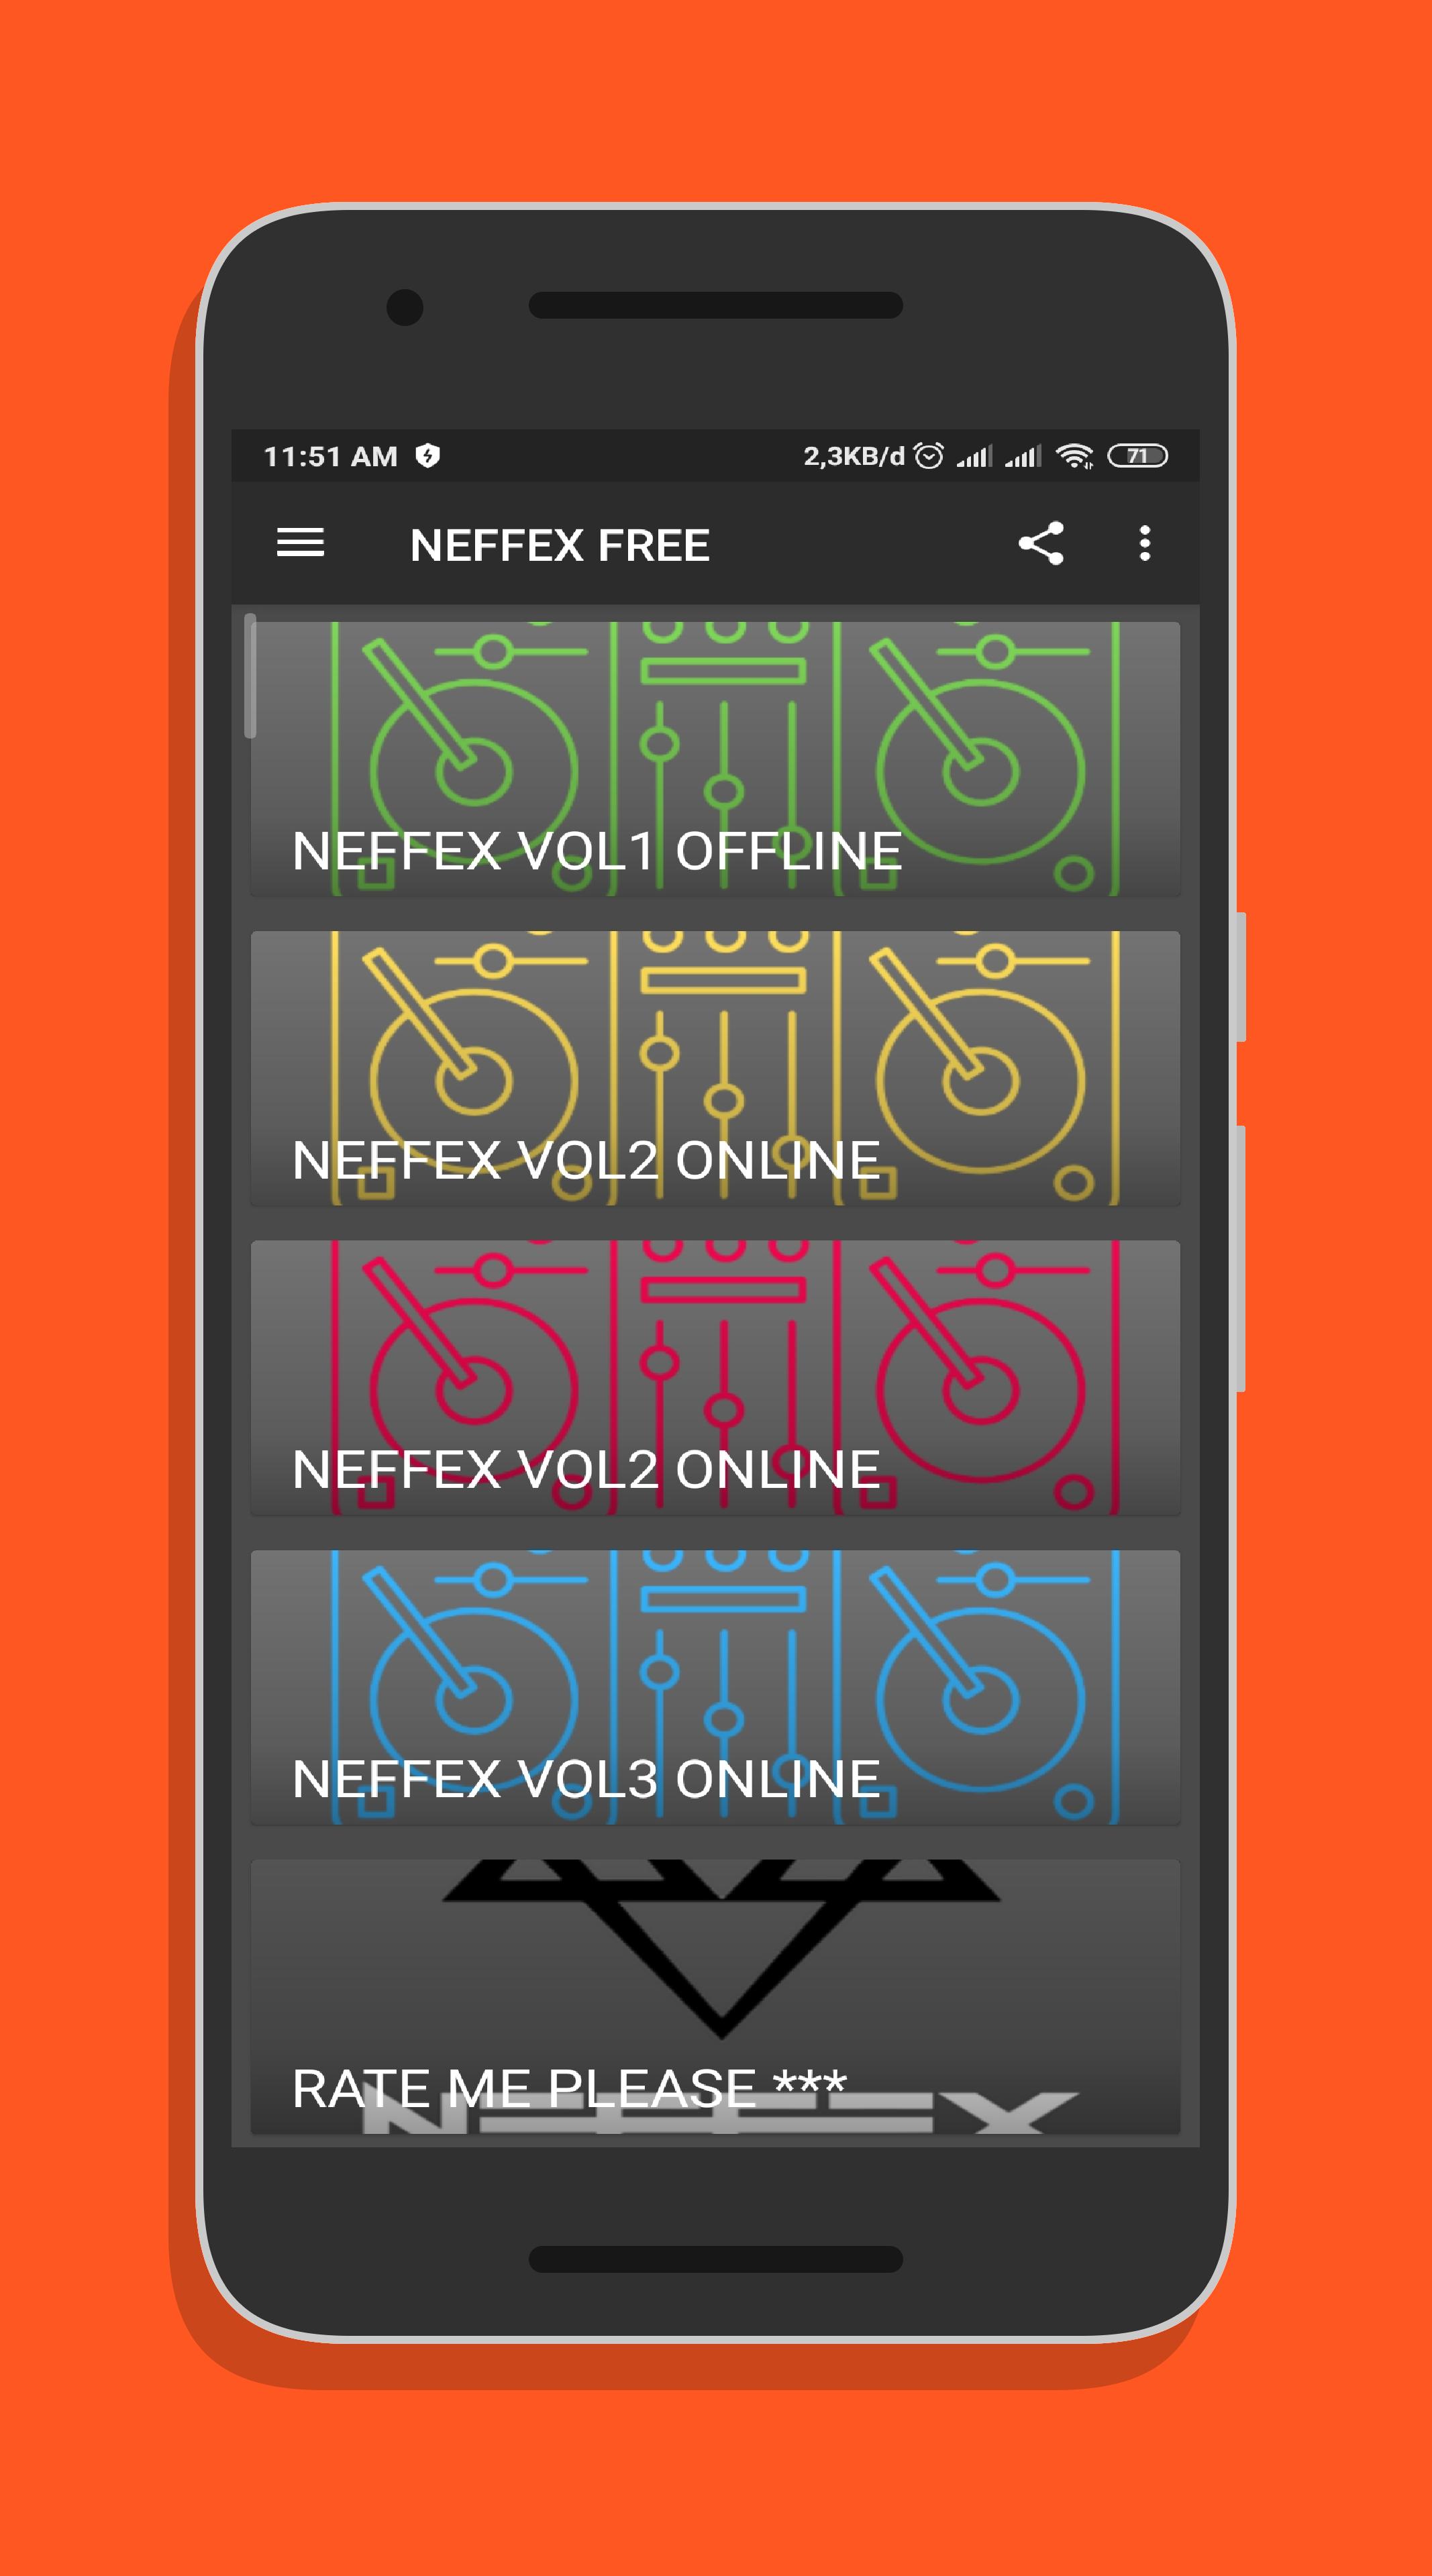 Neffex Grateful Download Free